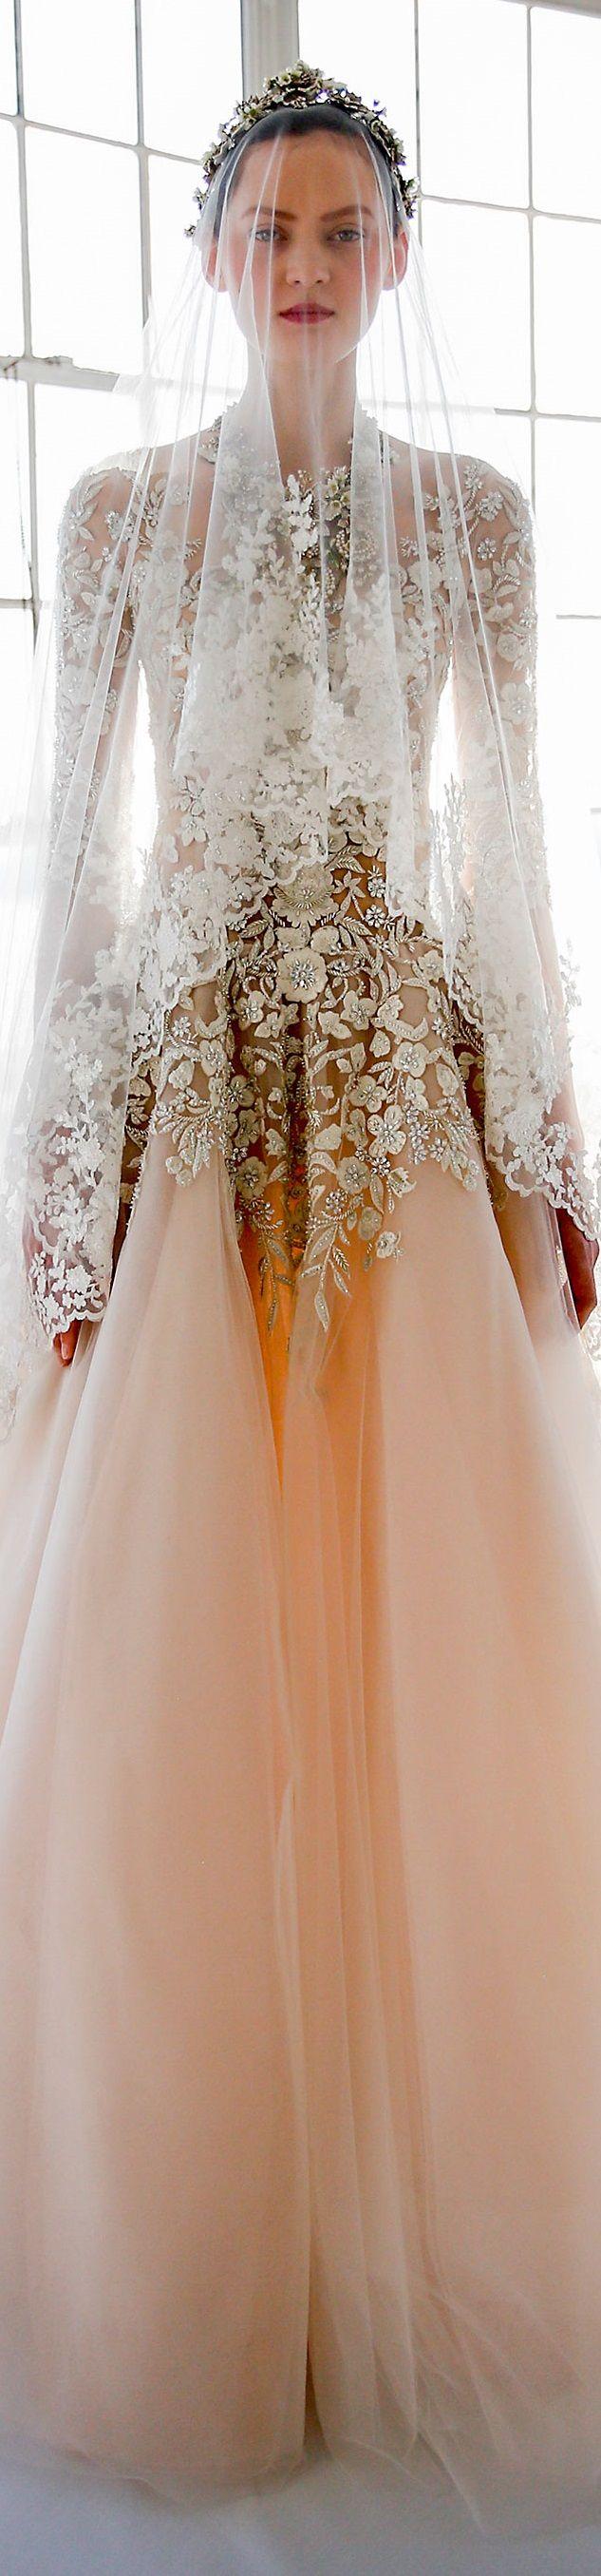 Wedding - Fairytale Bridal Veil